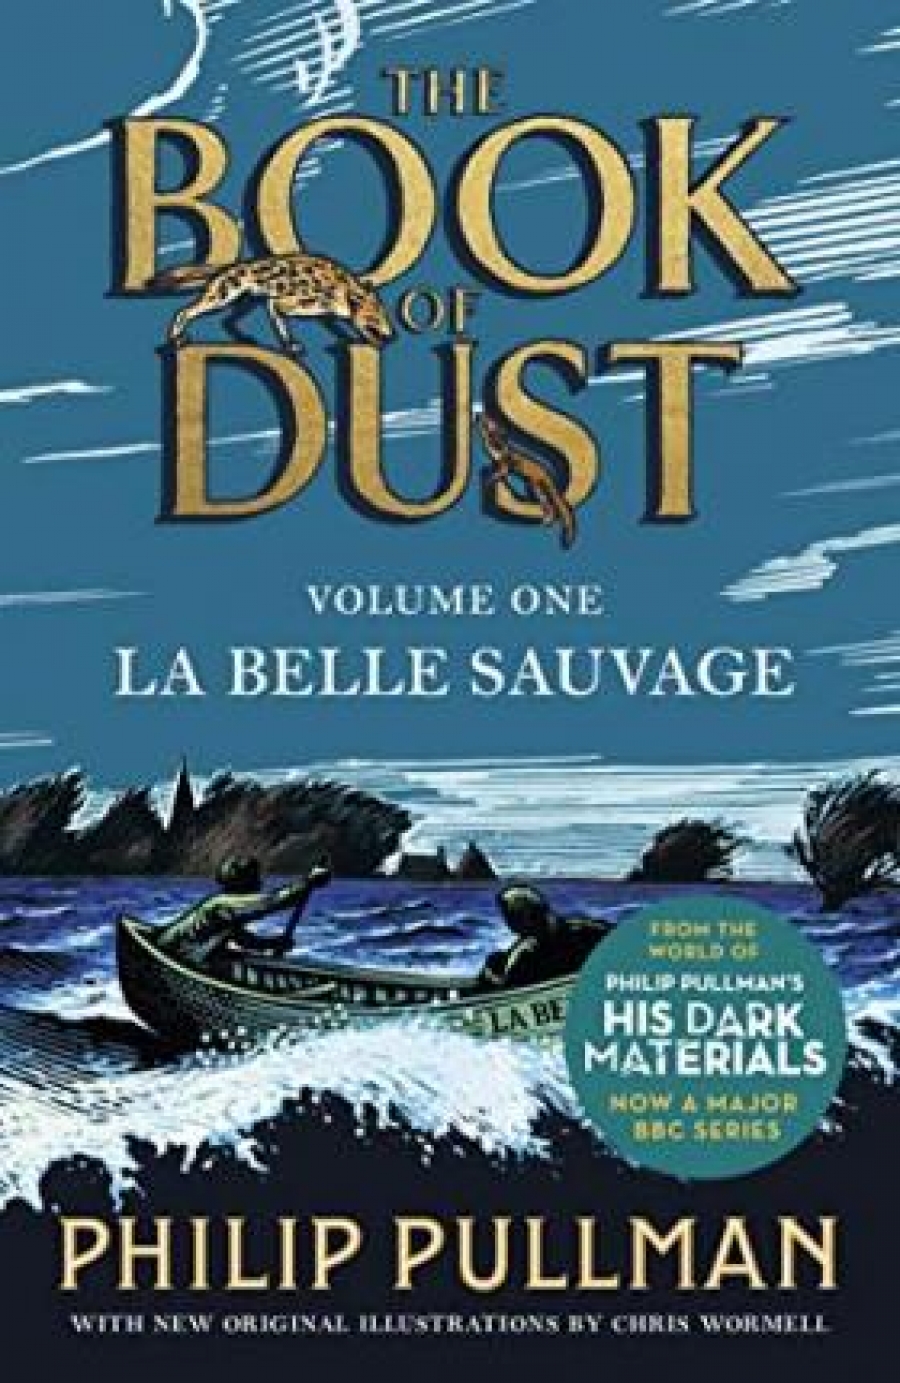 Pullman Philip La belle sauvage: the book of dust. 